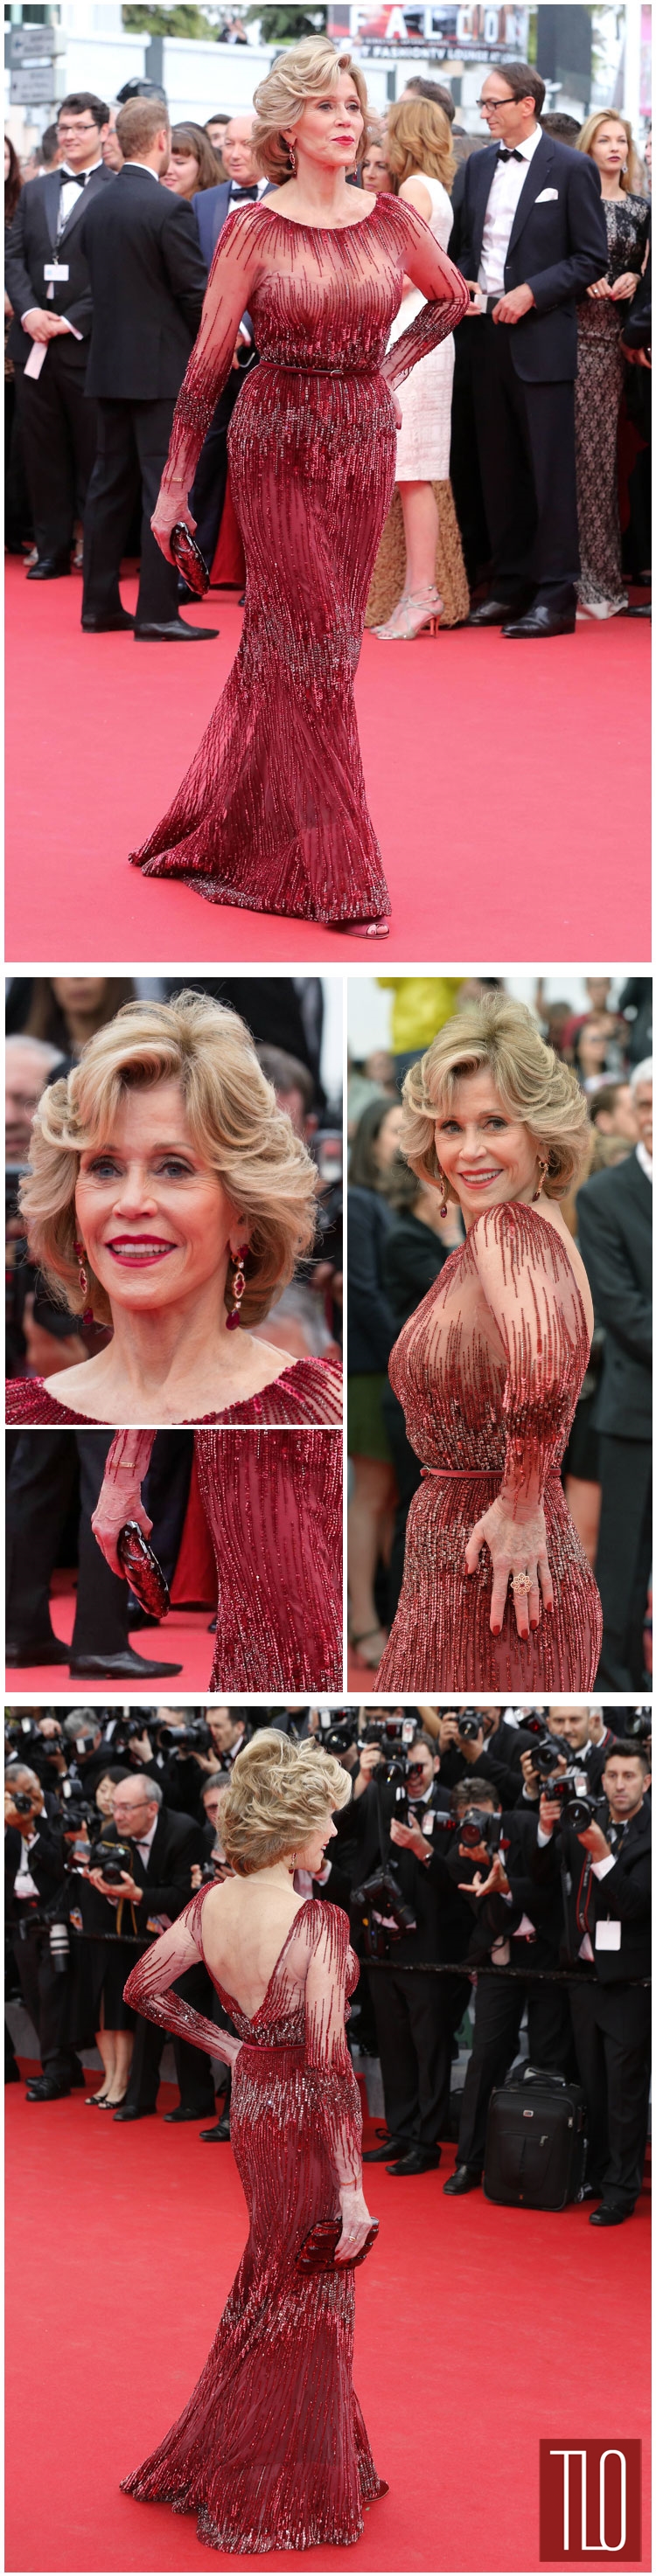 Jane-Fonda-Elie-Saab-Couture-Grace-Monaco-Premiere-Cannes-Tom-Lorenzo-Site-TLO (2)